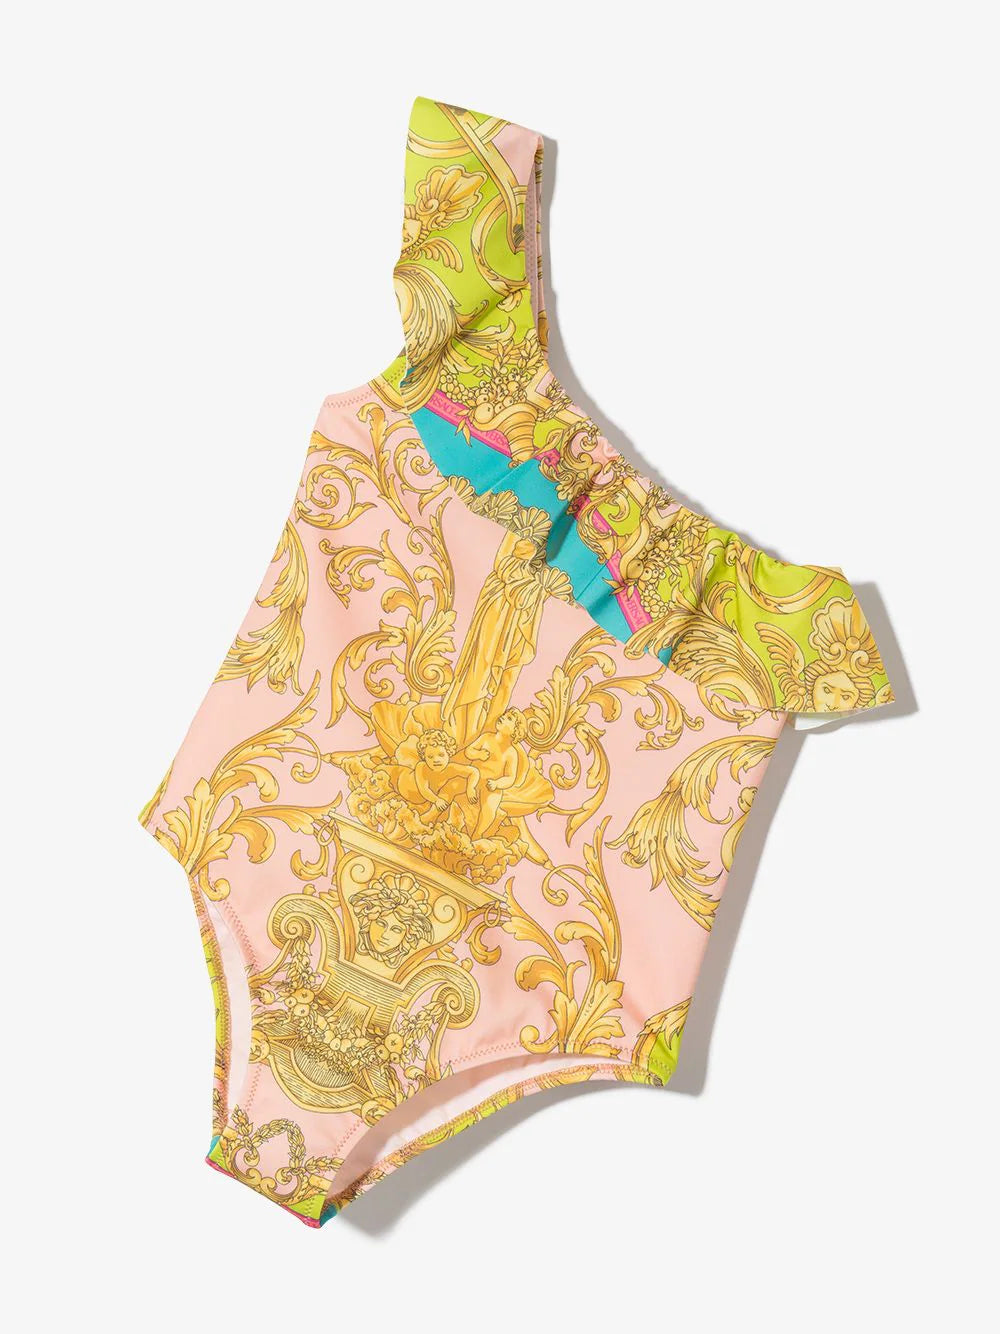 Versace Kids Barocco Goddess Swimsuit